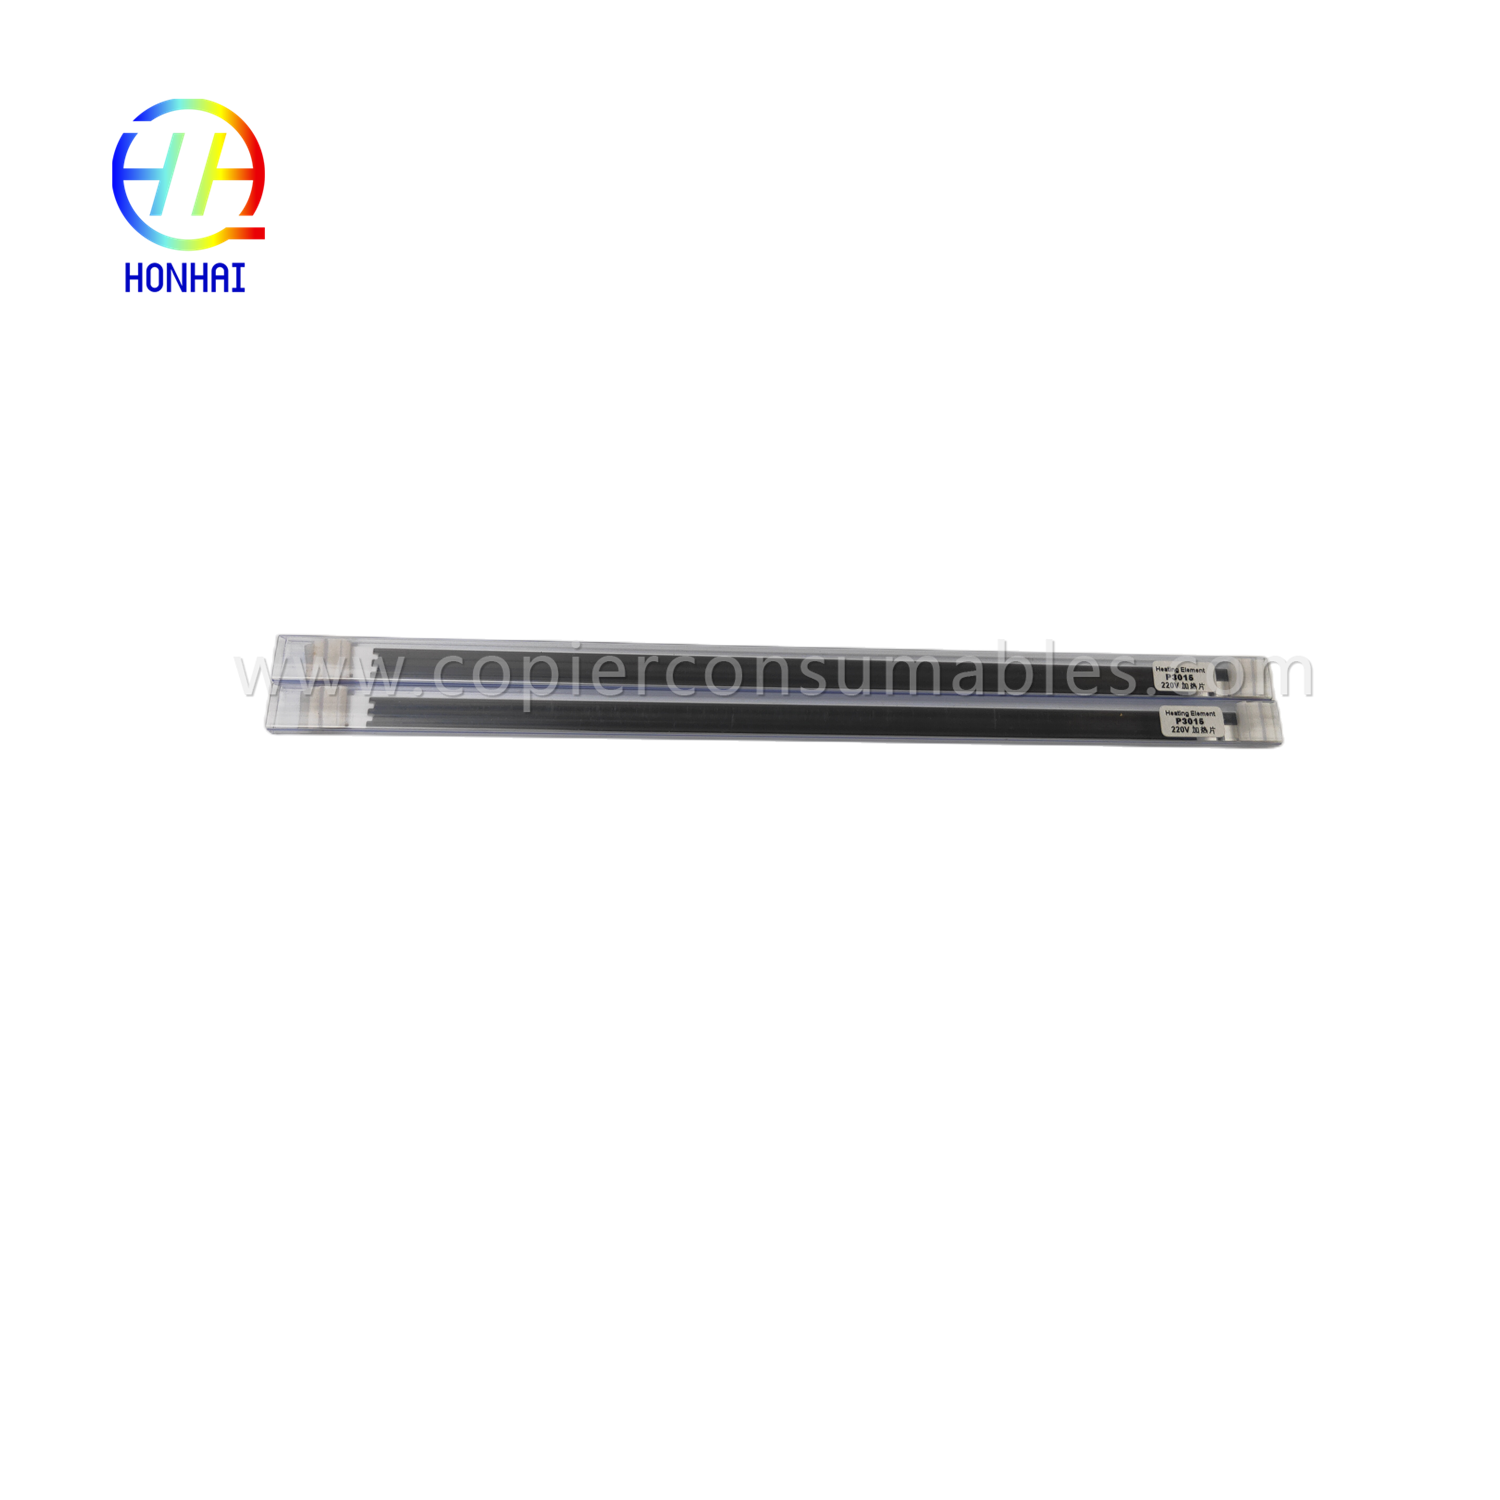 https://c585.goodao.net/heating-element-220v-japan-for-hp-p3015-3015d-3015dn-p3015n-3015x-rm1-6319-heat-oem-product/